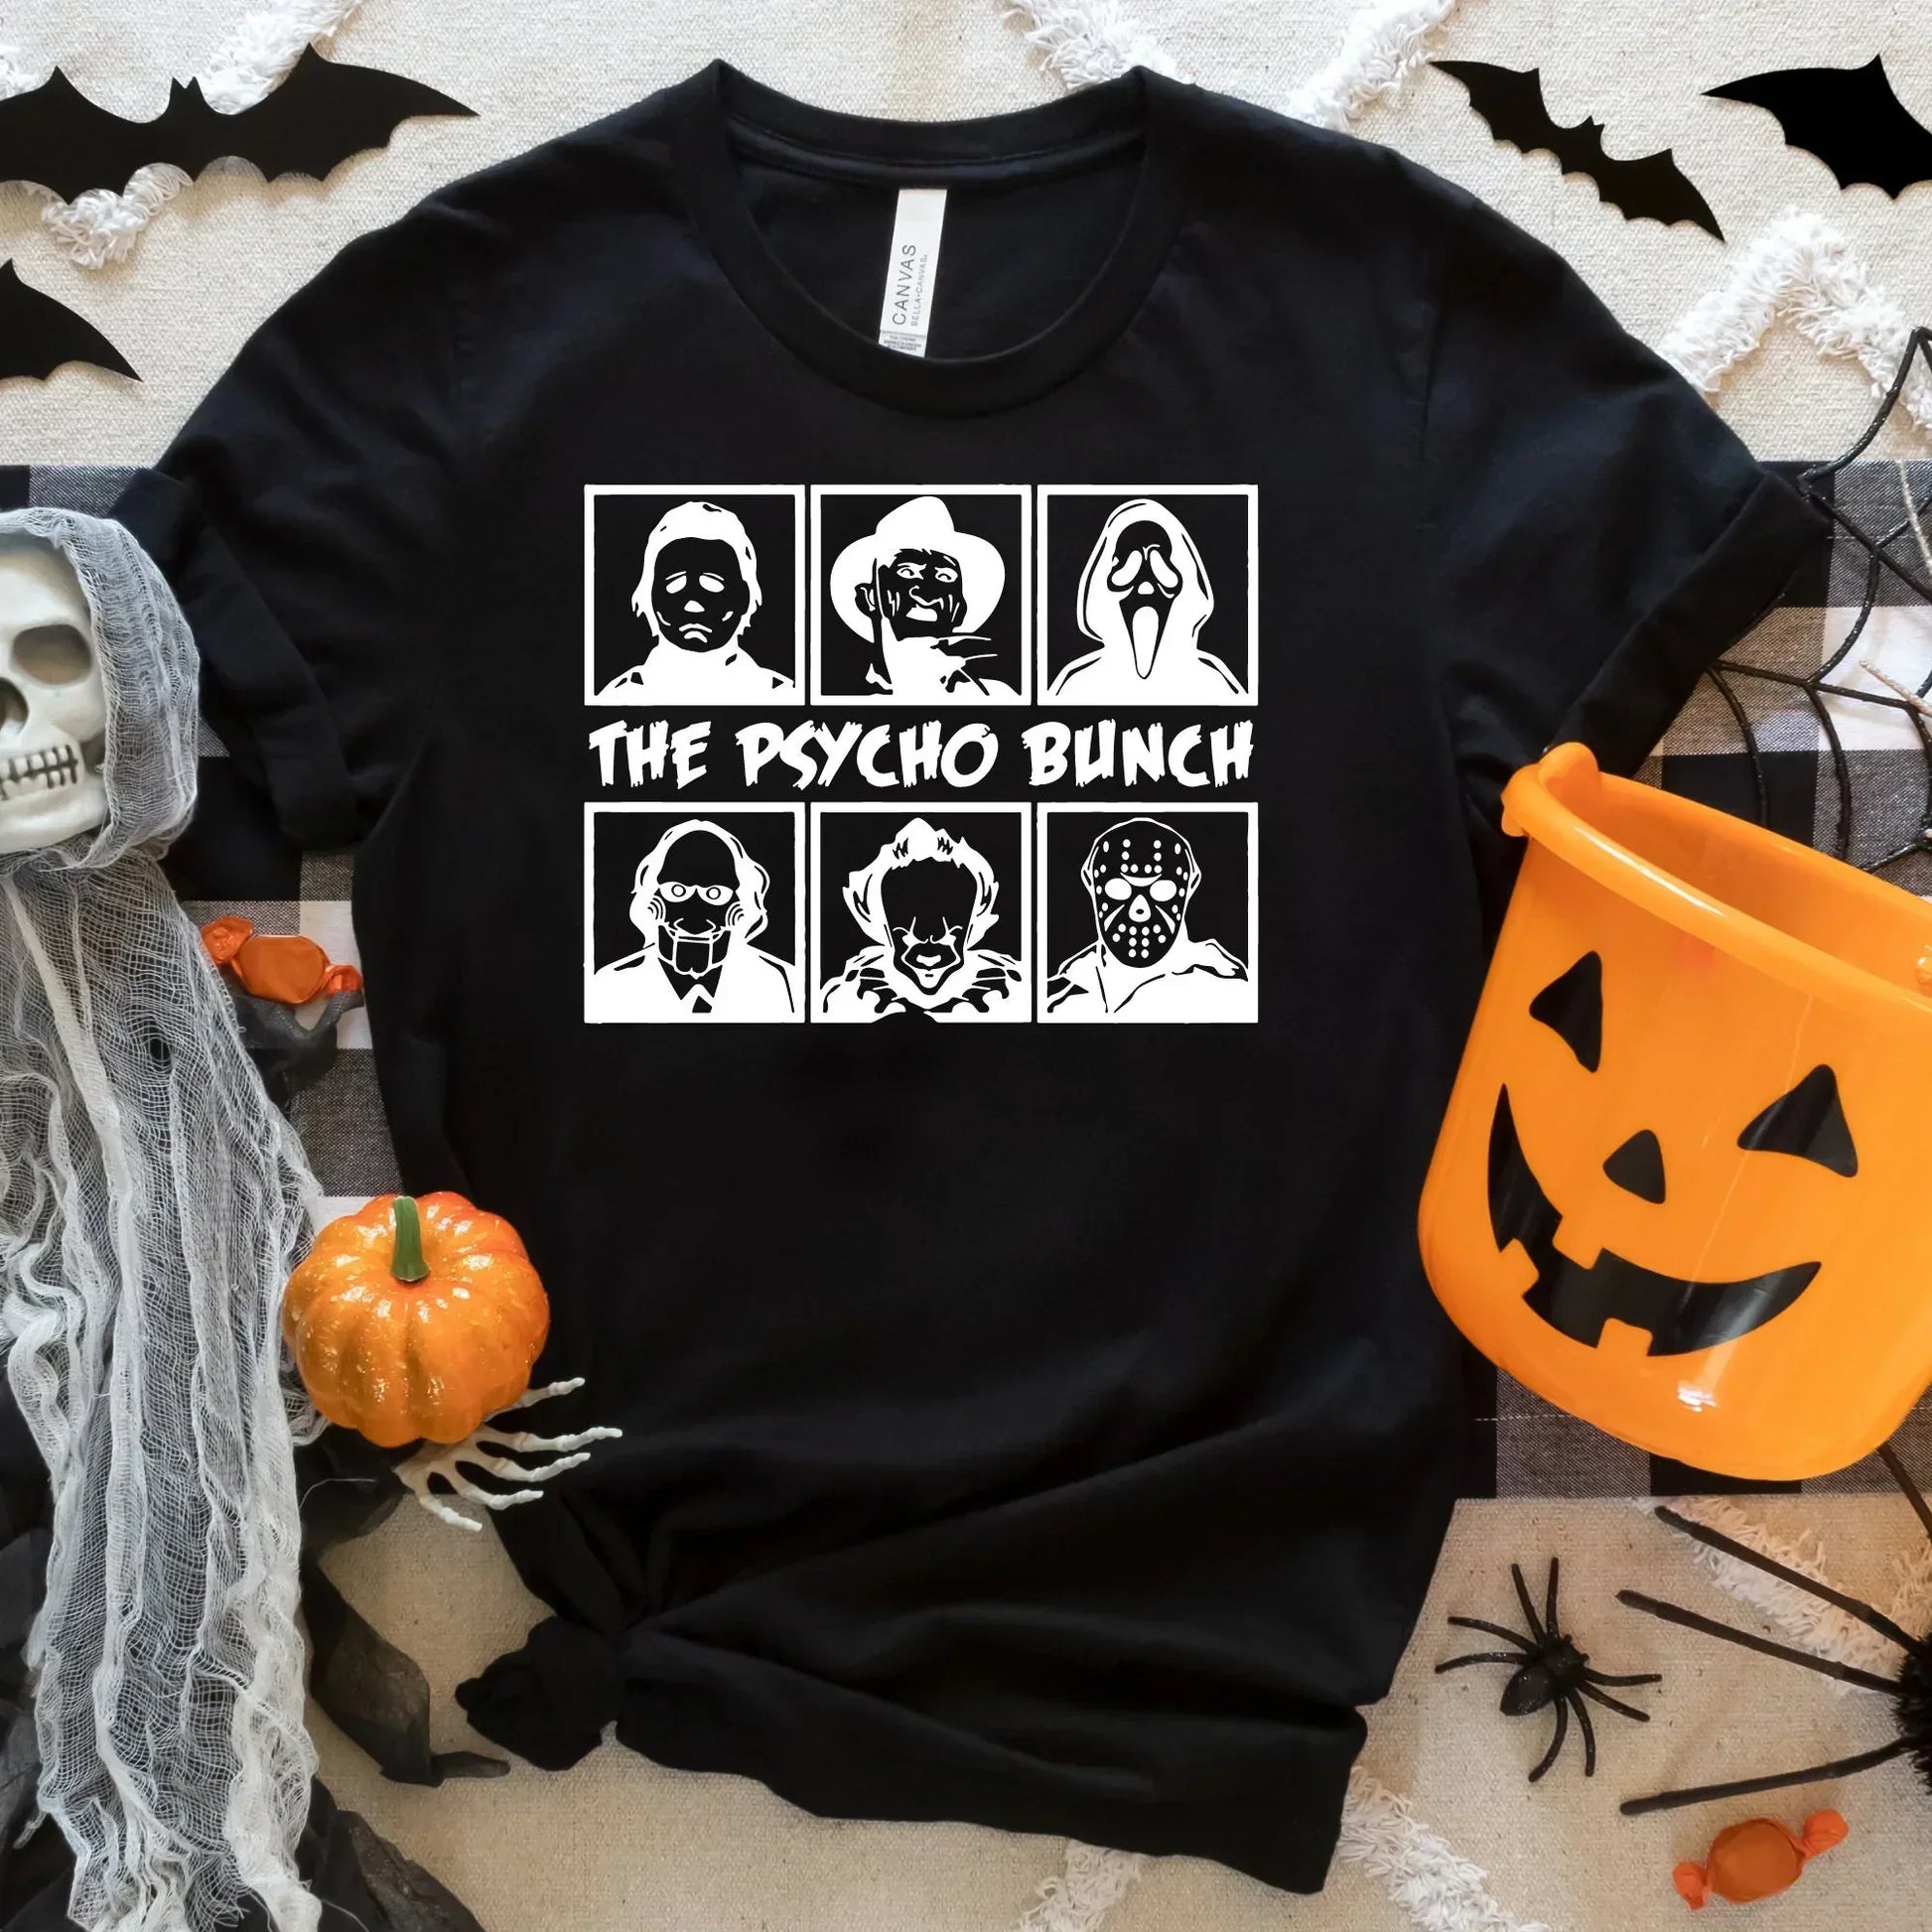 Horror Shirt, Horror Characters T-Shirt, Halloween Sweatshirt, Friends Themed TShirt, Horror Film Shirt, Horror Movies Gifts, Horror Sweater HMDesignStudioUS